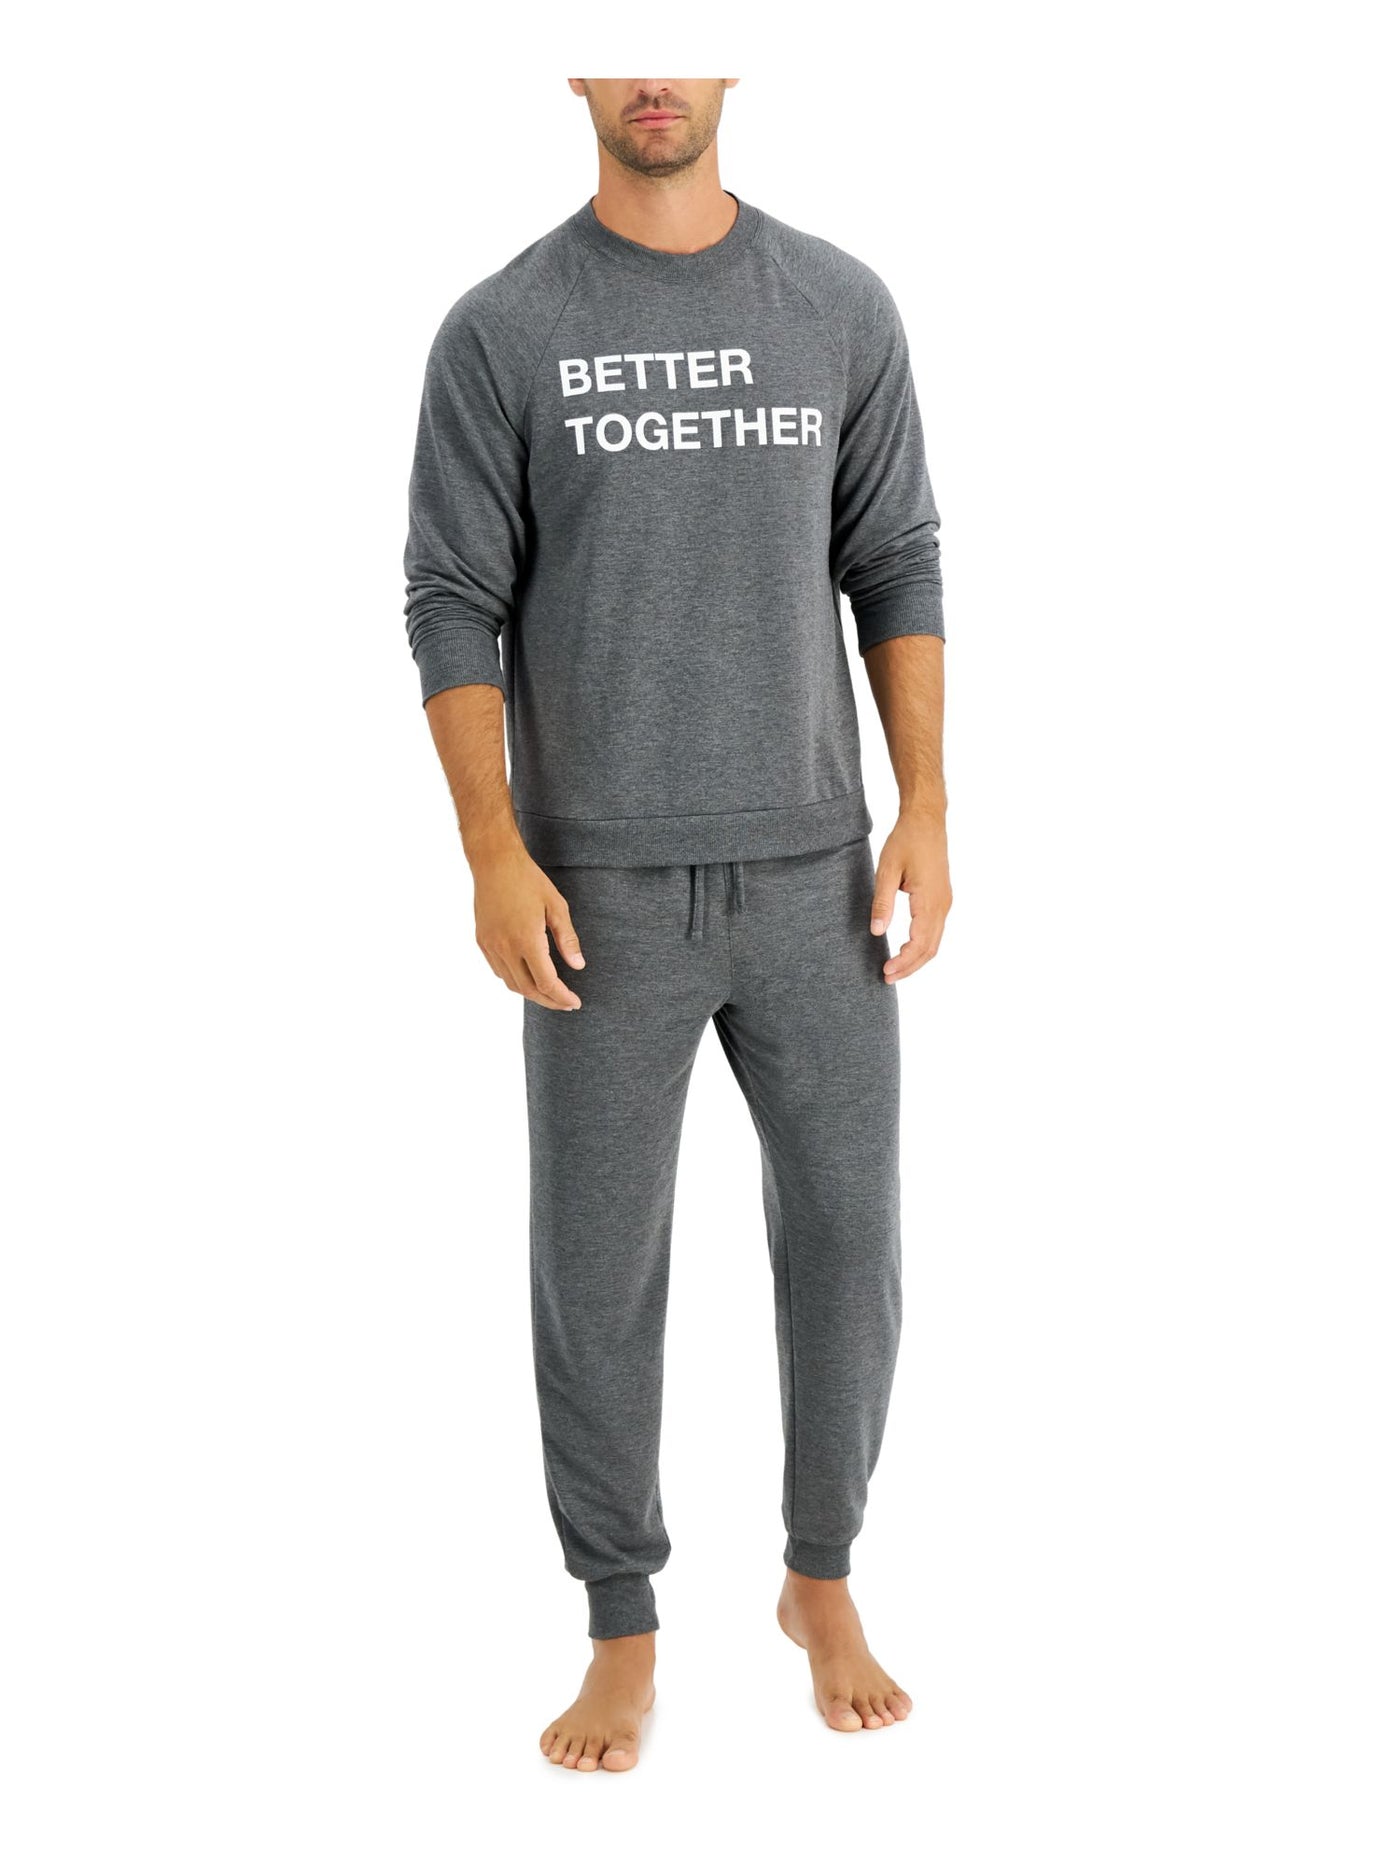 FAMILY PJs Mens Gray Graphic Drawstring T-Shirt Top Cuffed Pants Pajamas M